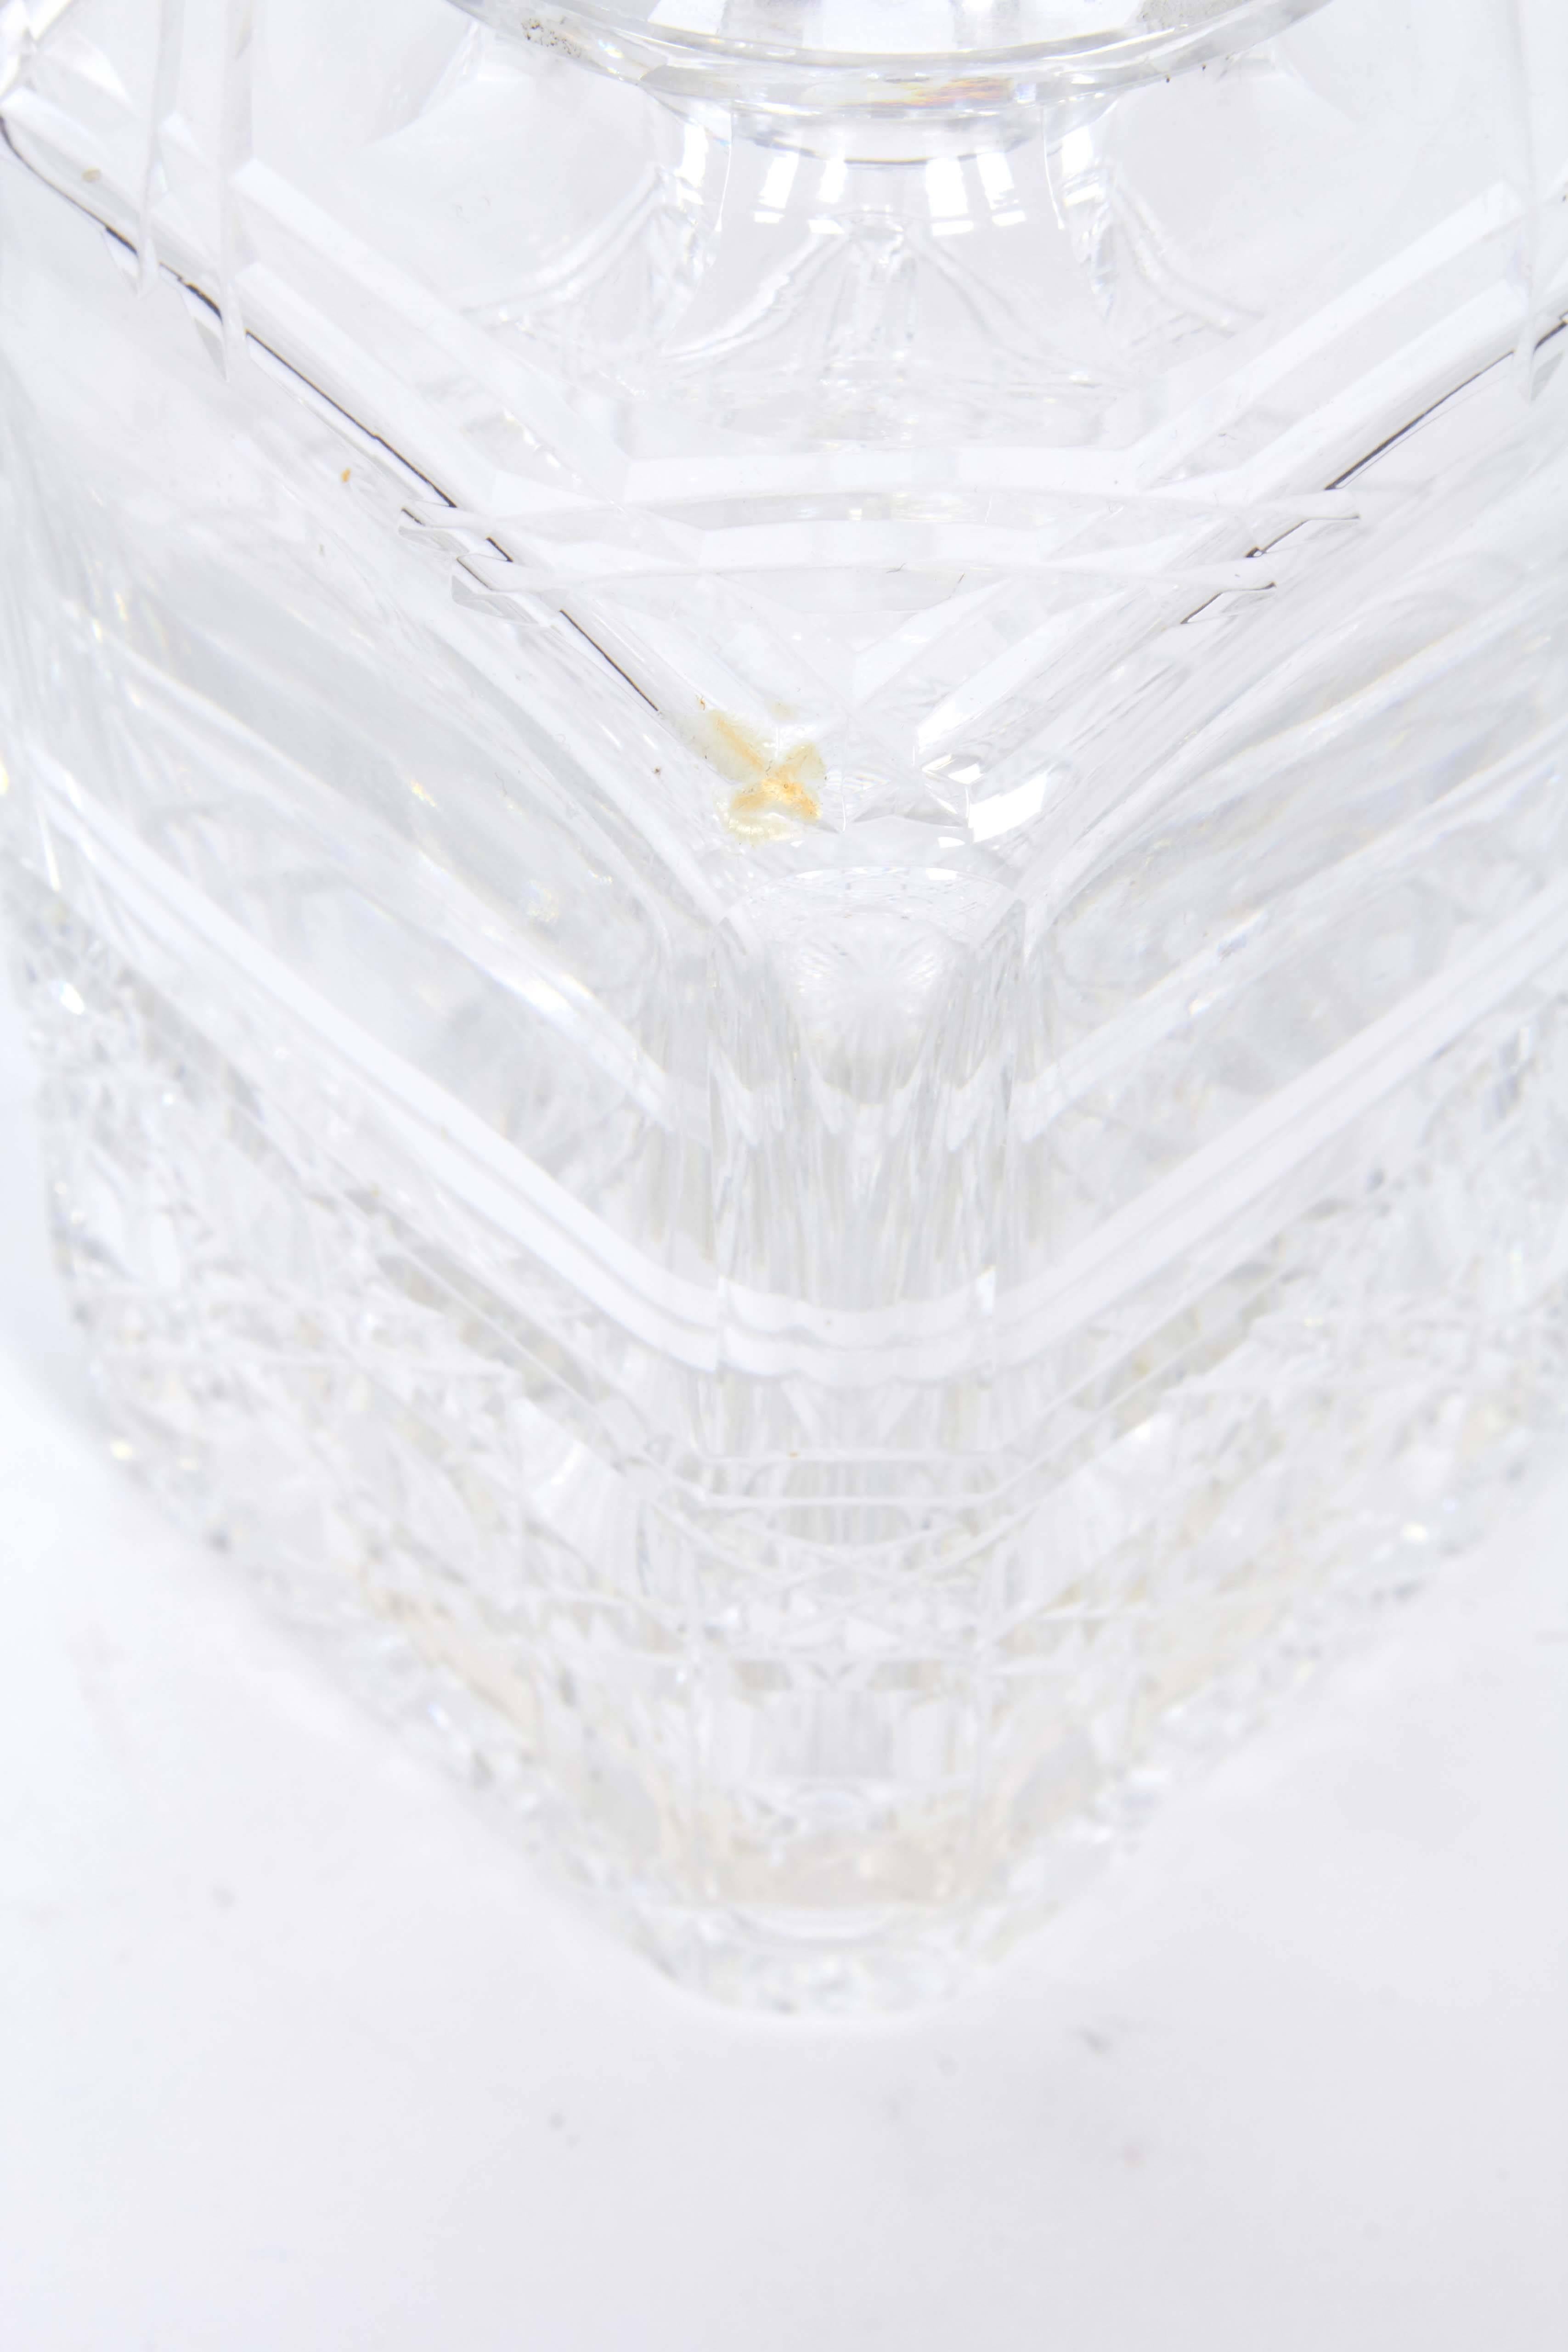 edinburgh crystal decanter designs